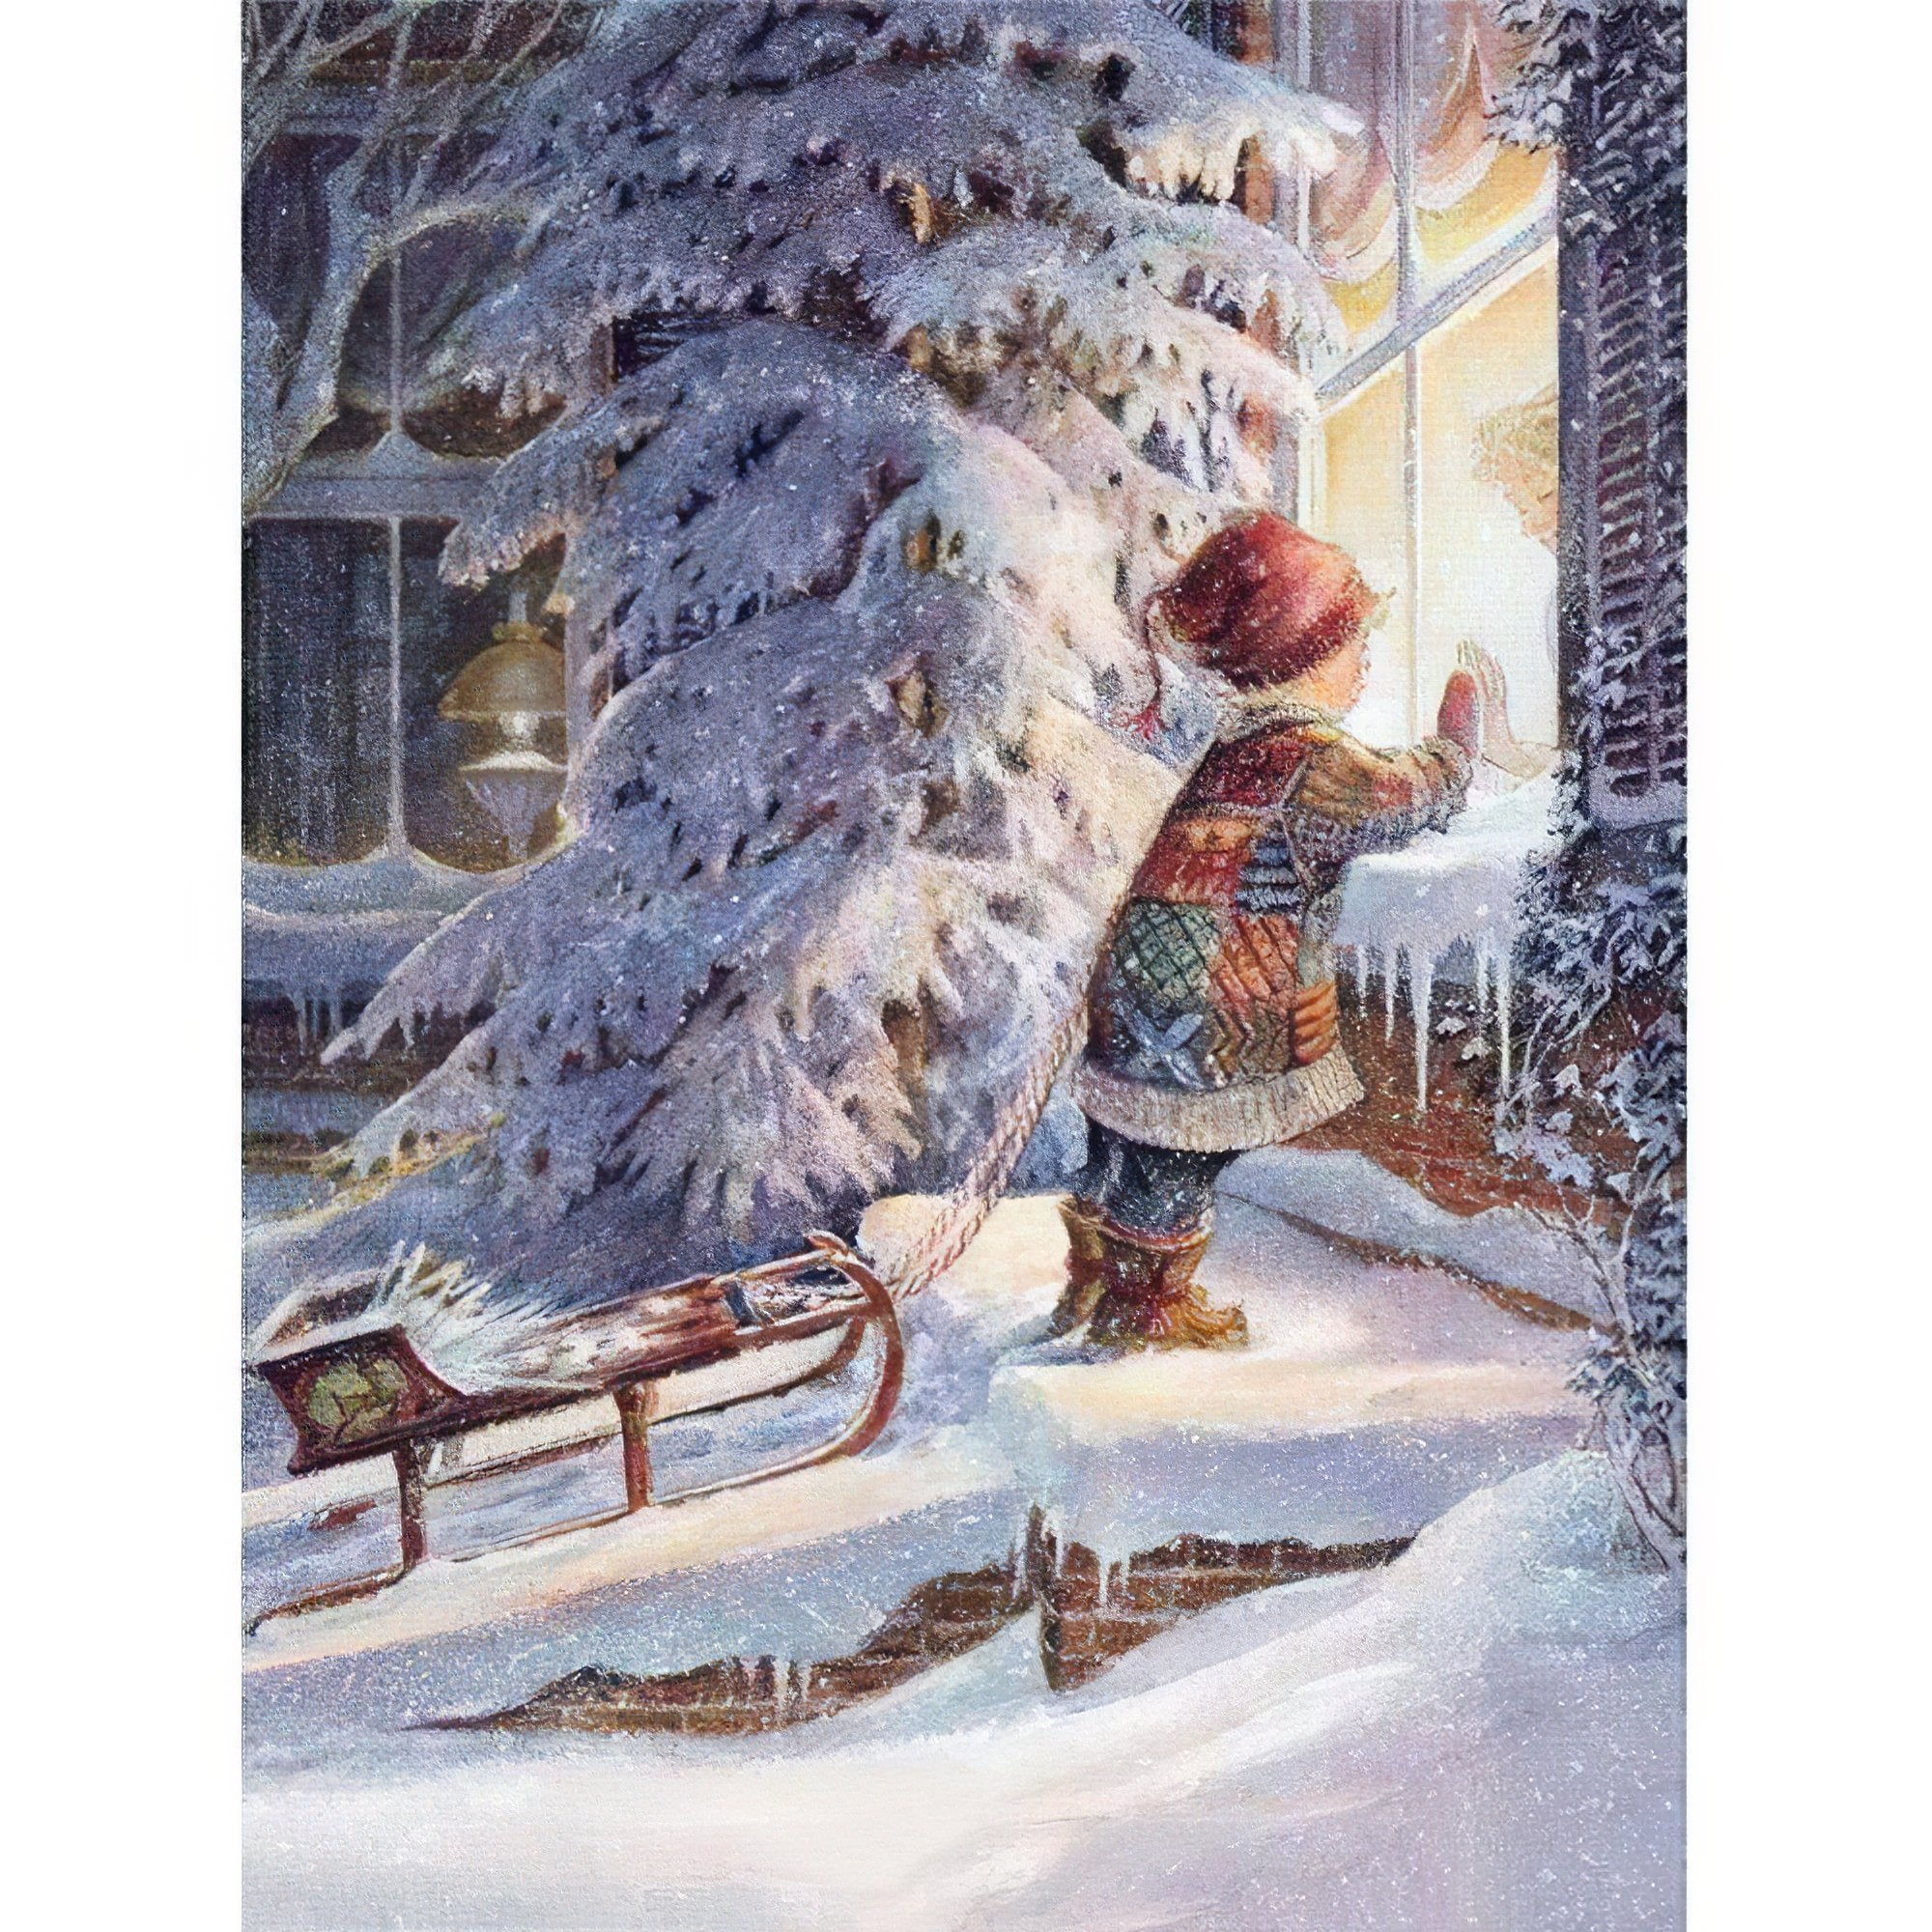 Capture the festive spirit and joy of the season.Exciting Girl Of Christmas - Diamondartlove